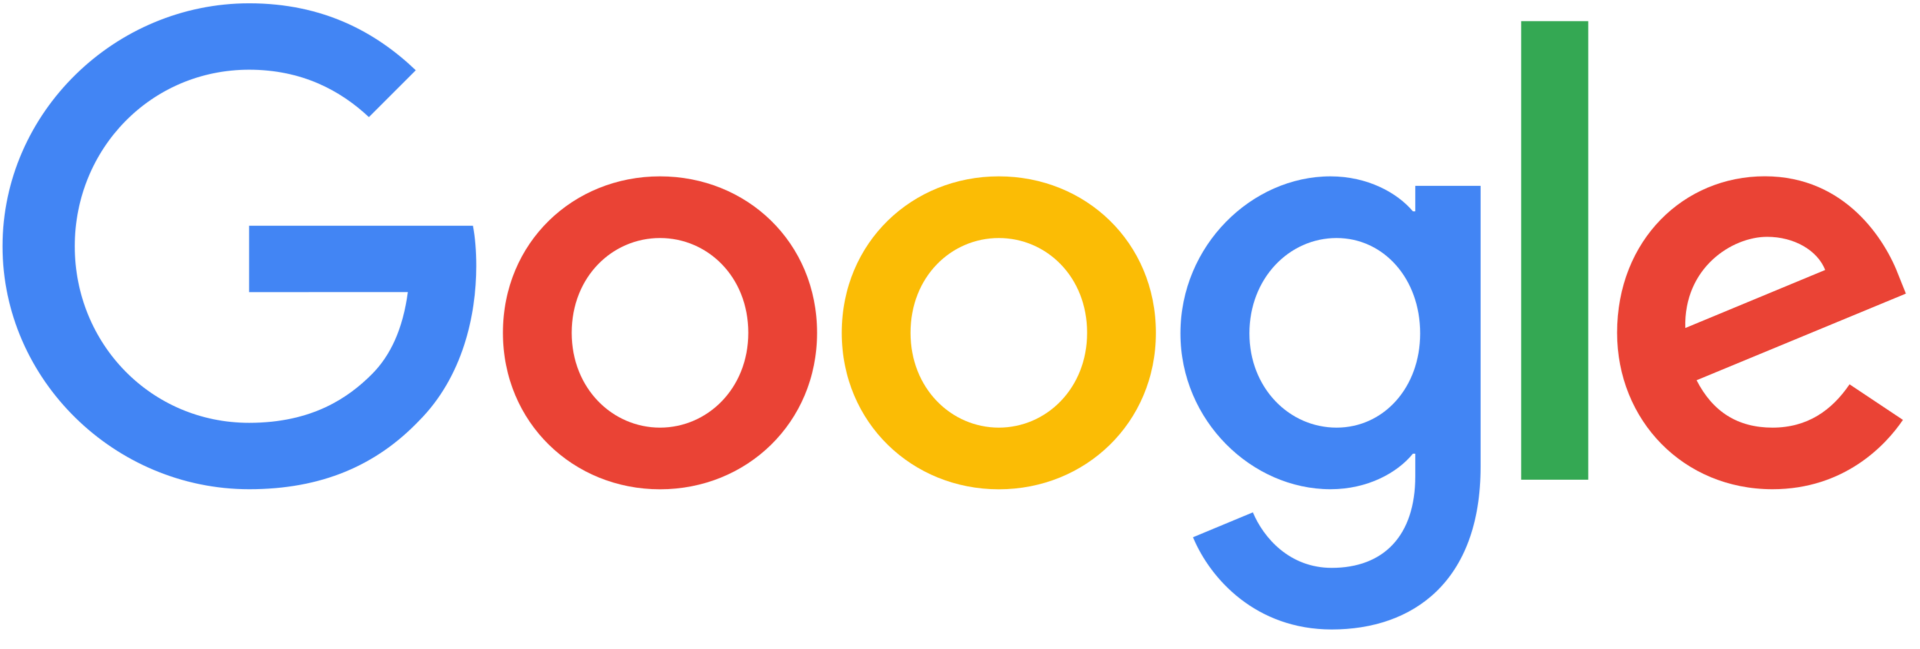 Bard AIの開発元、Google社のロゴ。